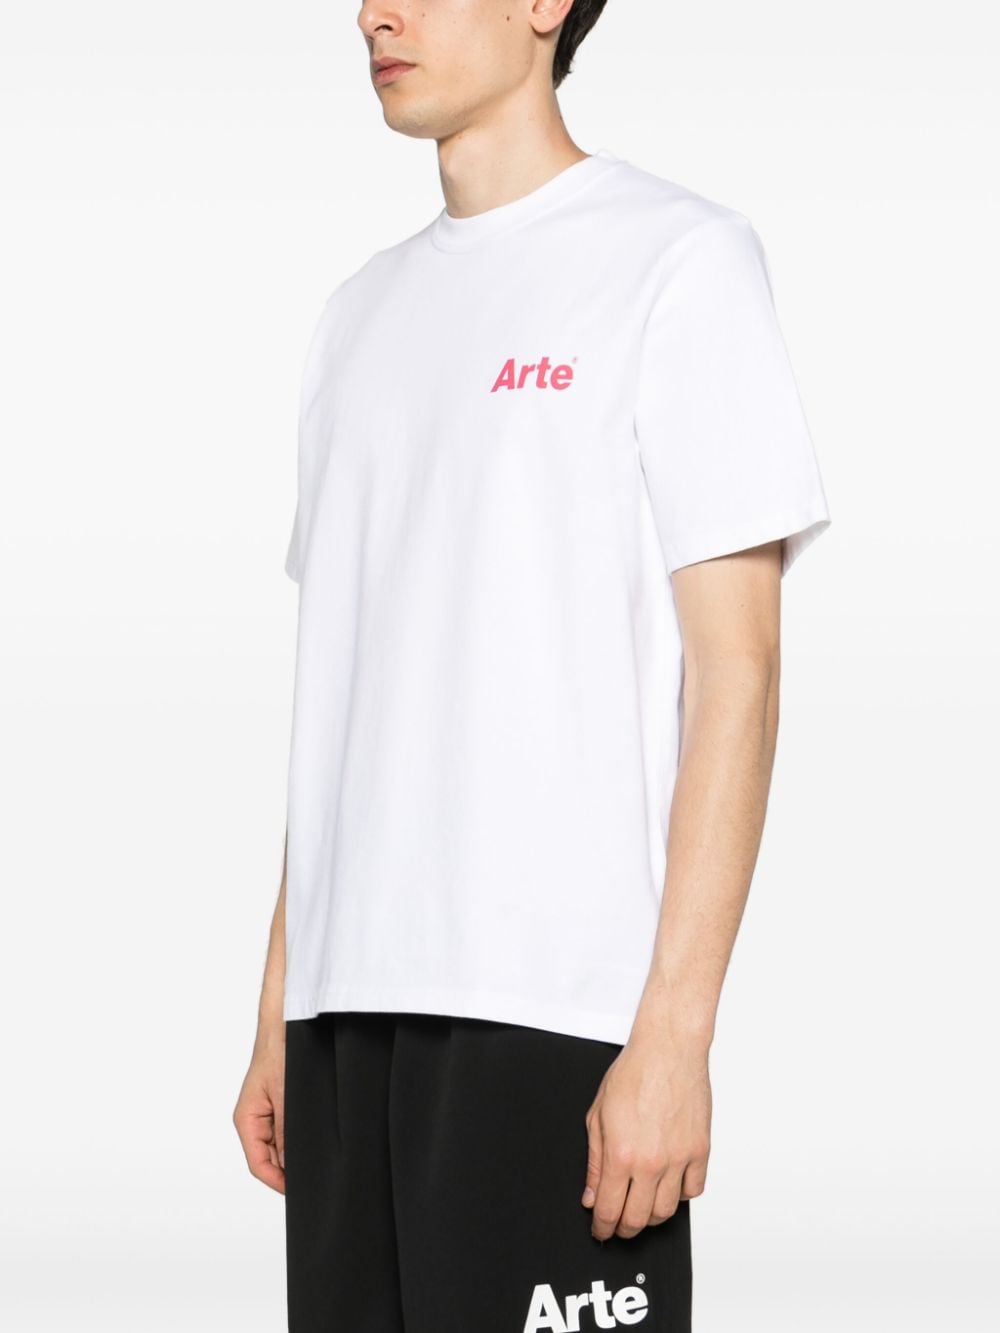 Arte - T-shirt white Heart - Lothaire